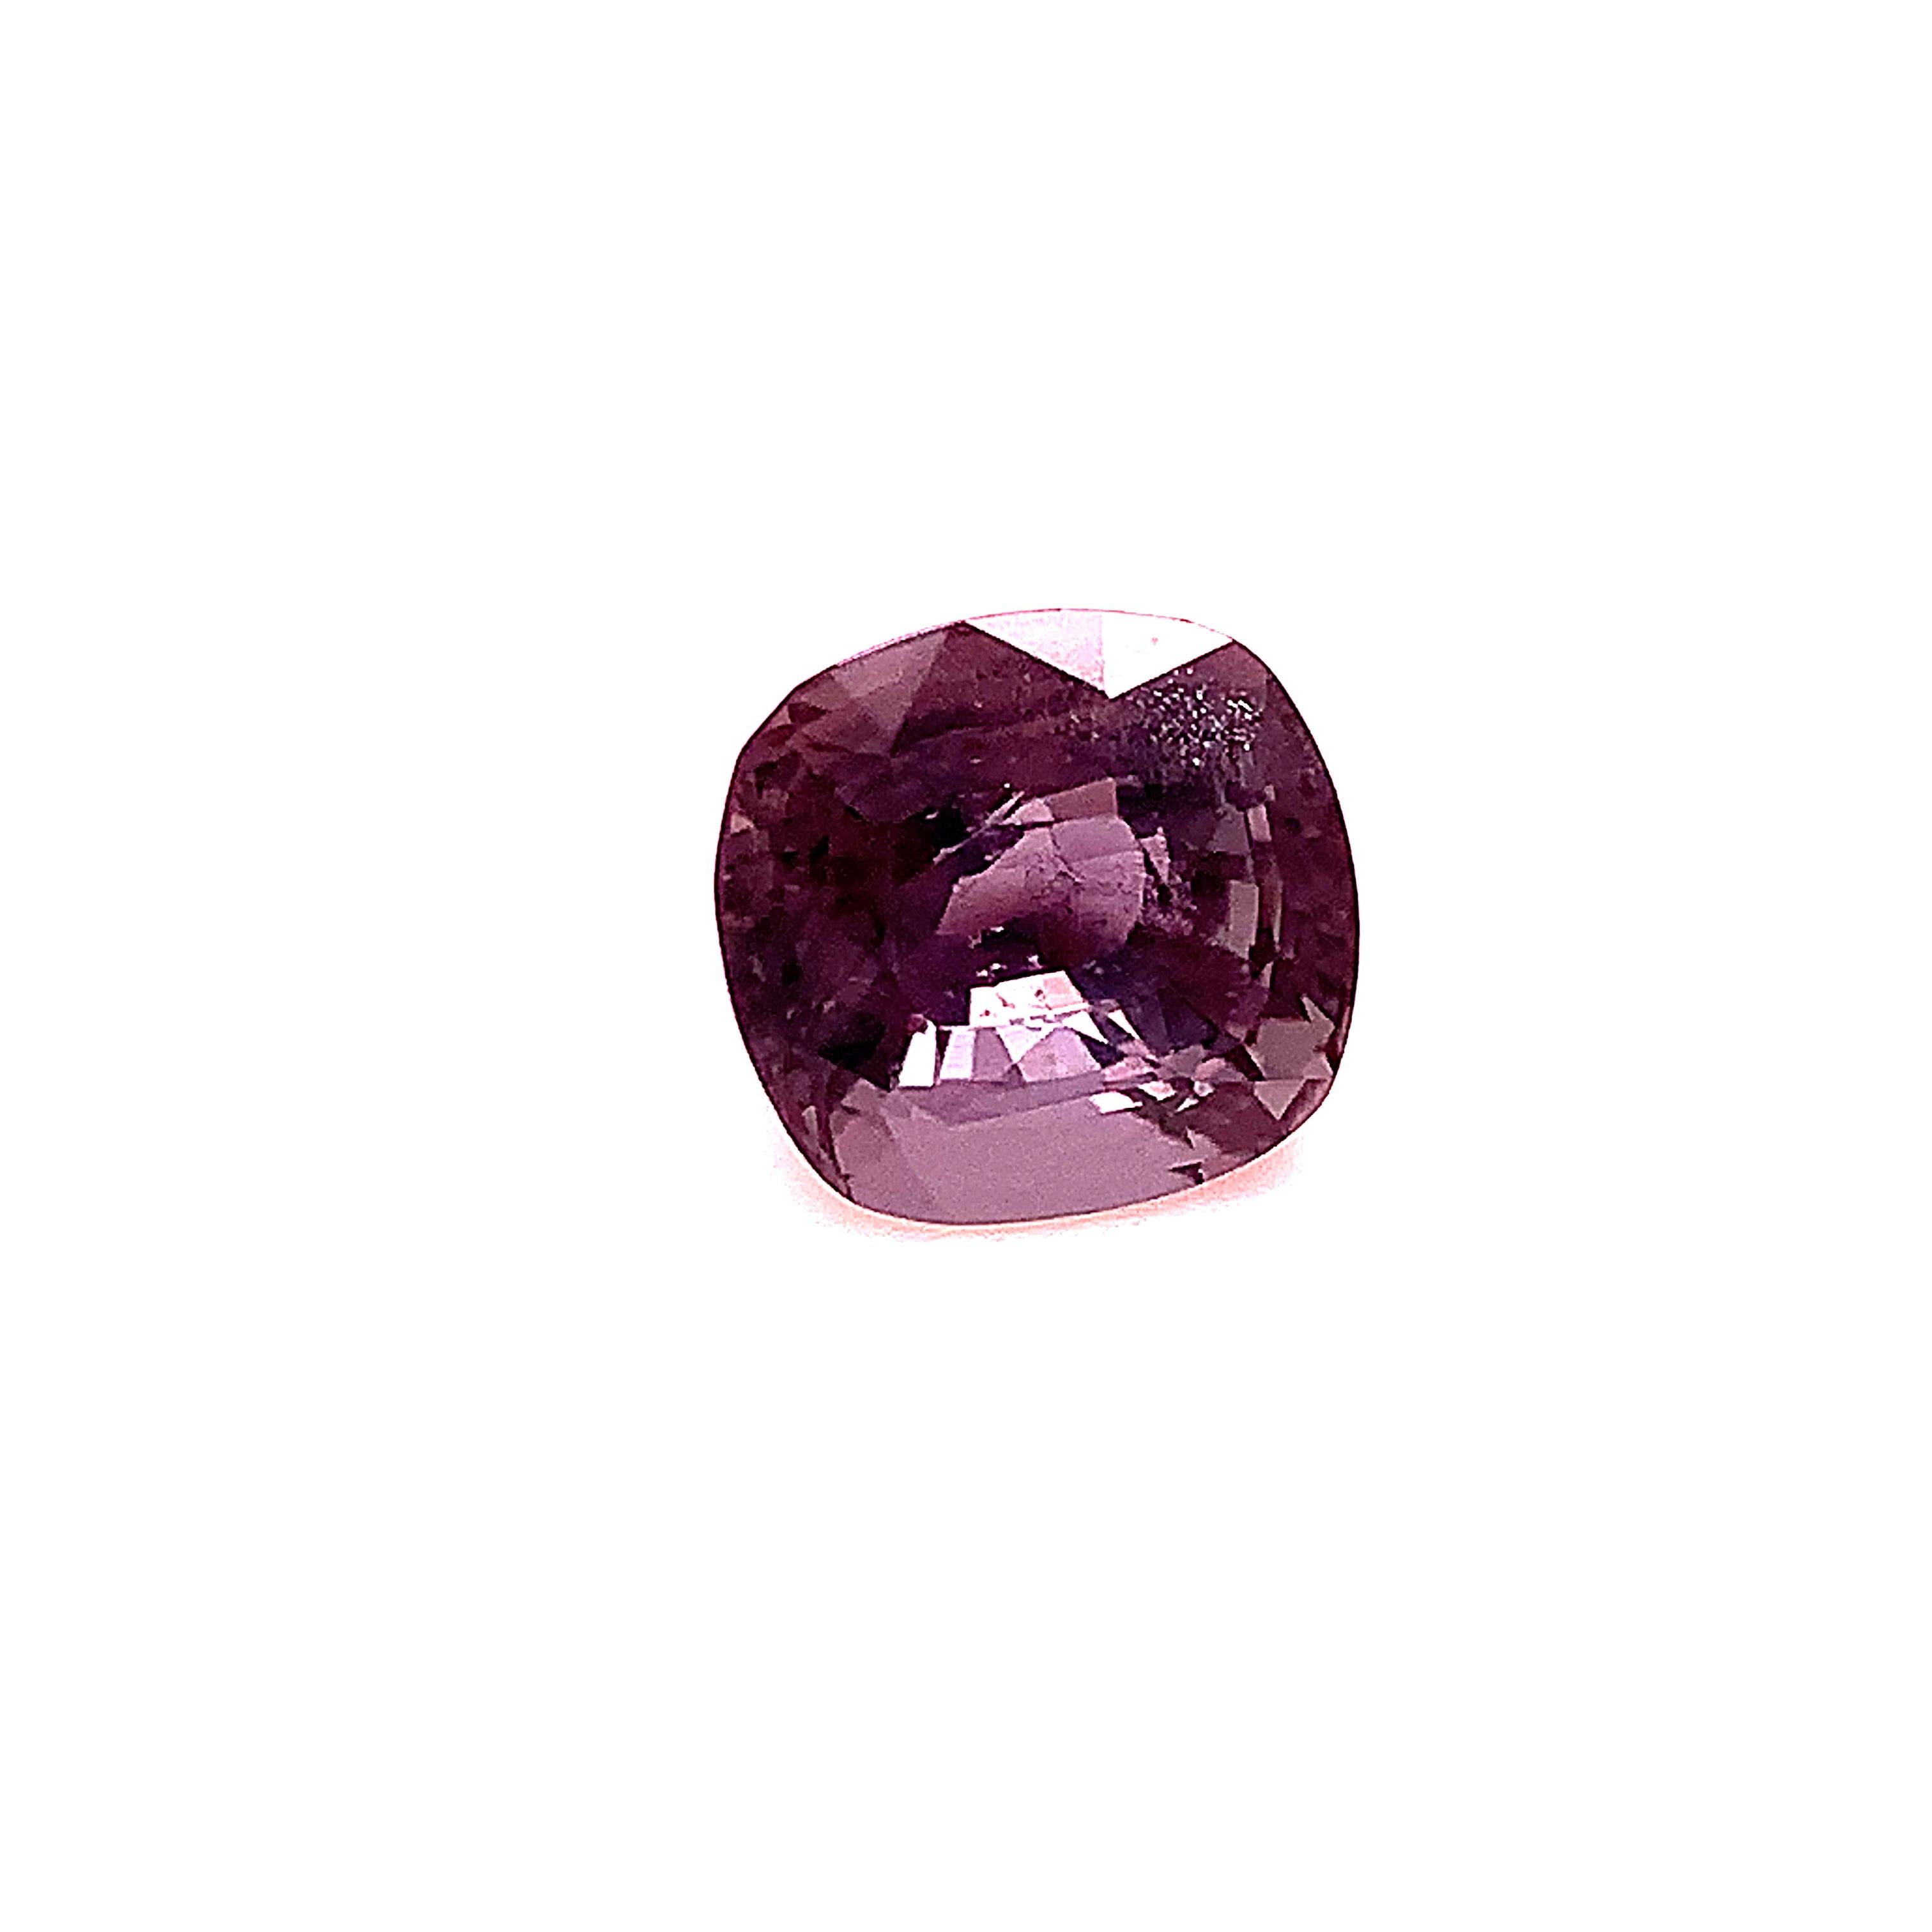 Pierre précieuse non sertie d'Alexandrite chrysobéryl de 1,16 carat, certifiée GIA - RTP en vente 1